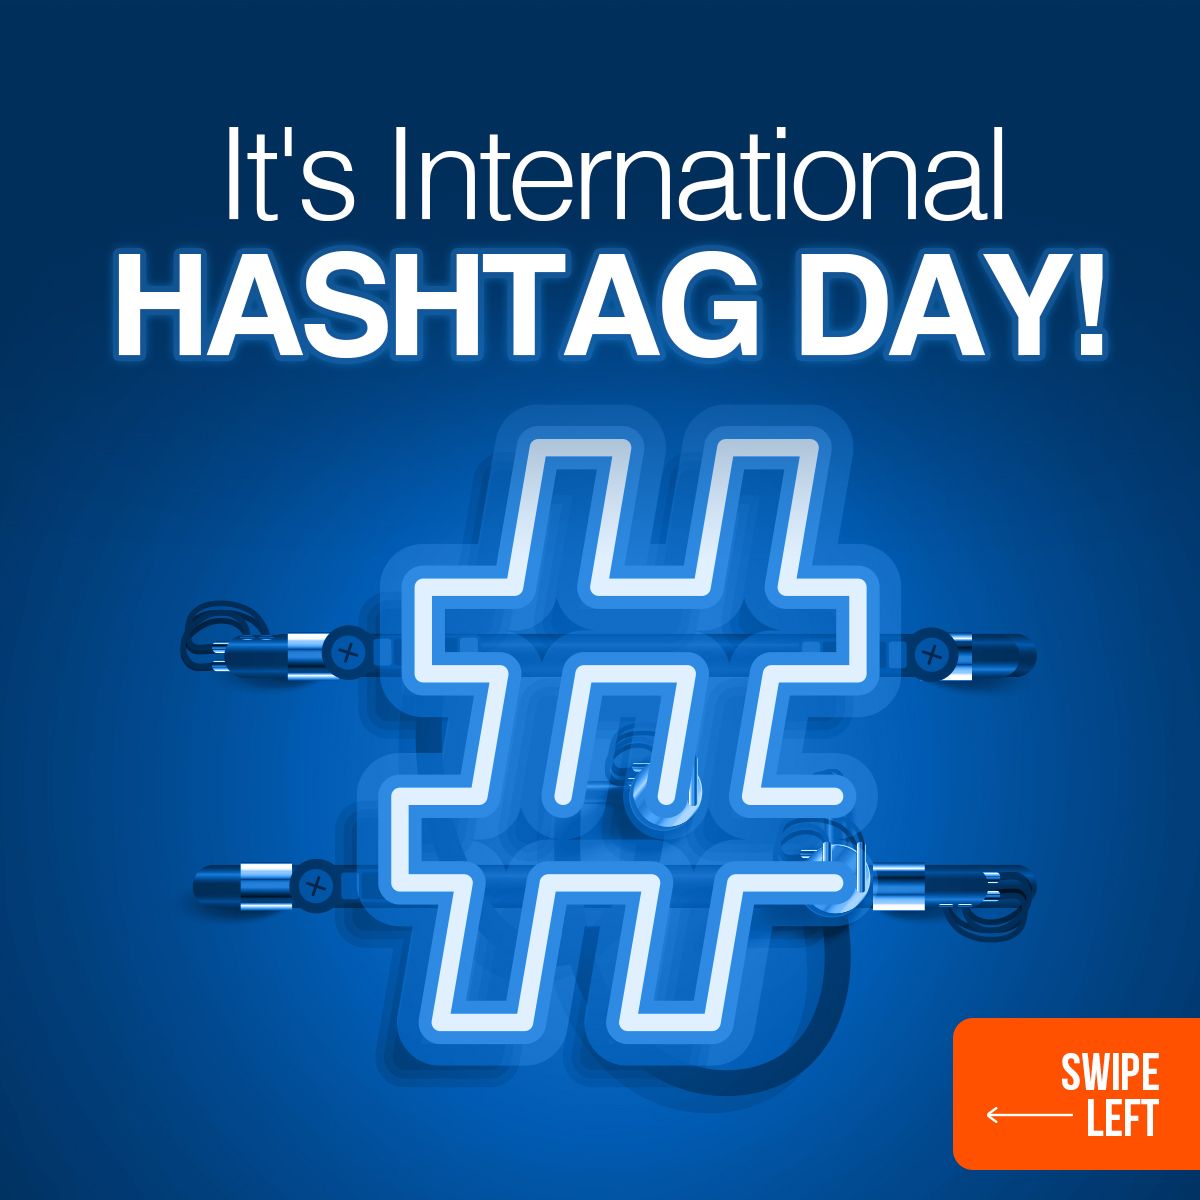 Hashtag Day!